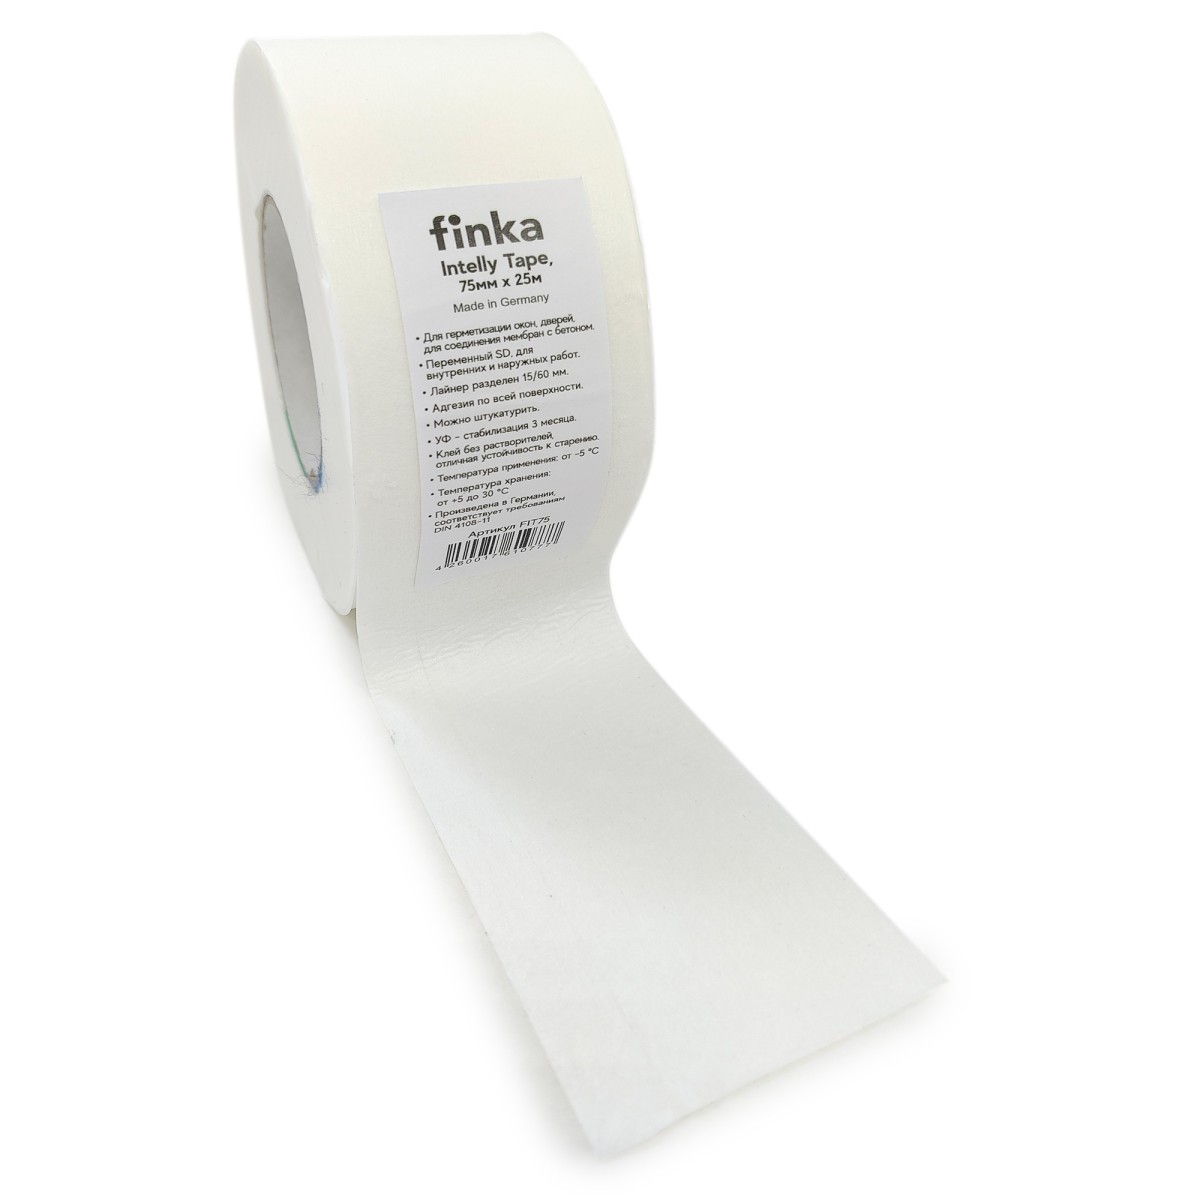 Клейкая оконная лента Finka Intelly Tape 75мм x 25м, белый